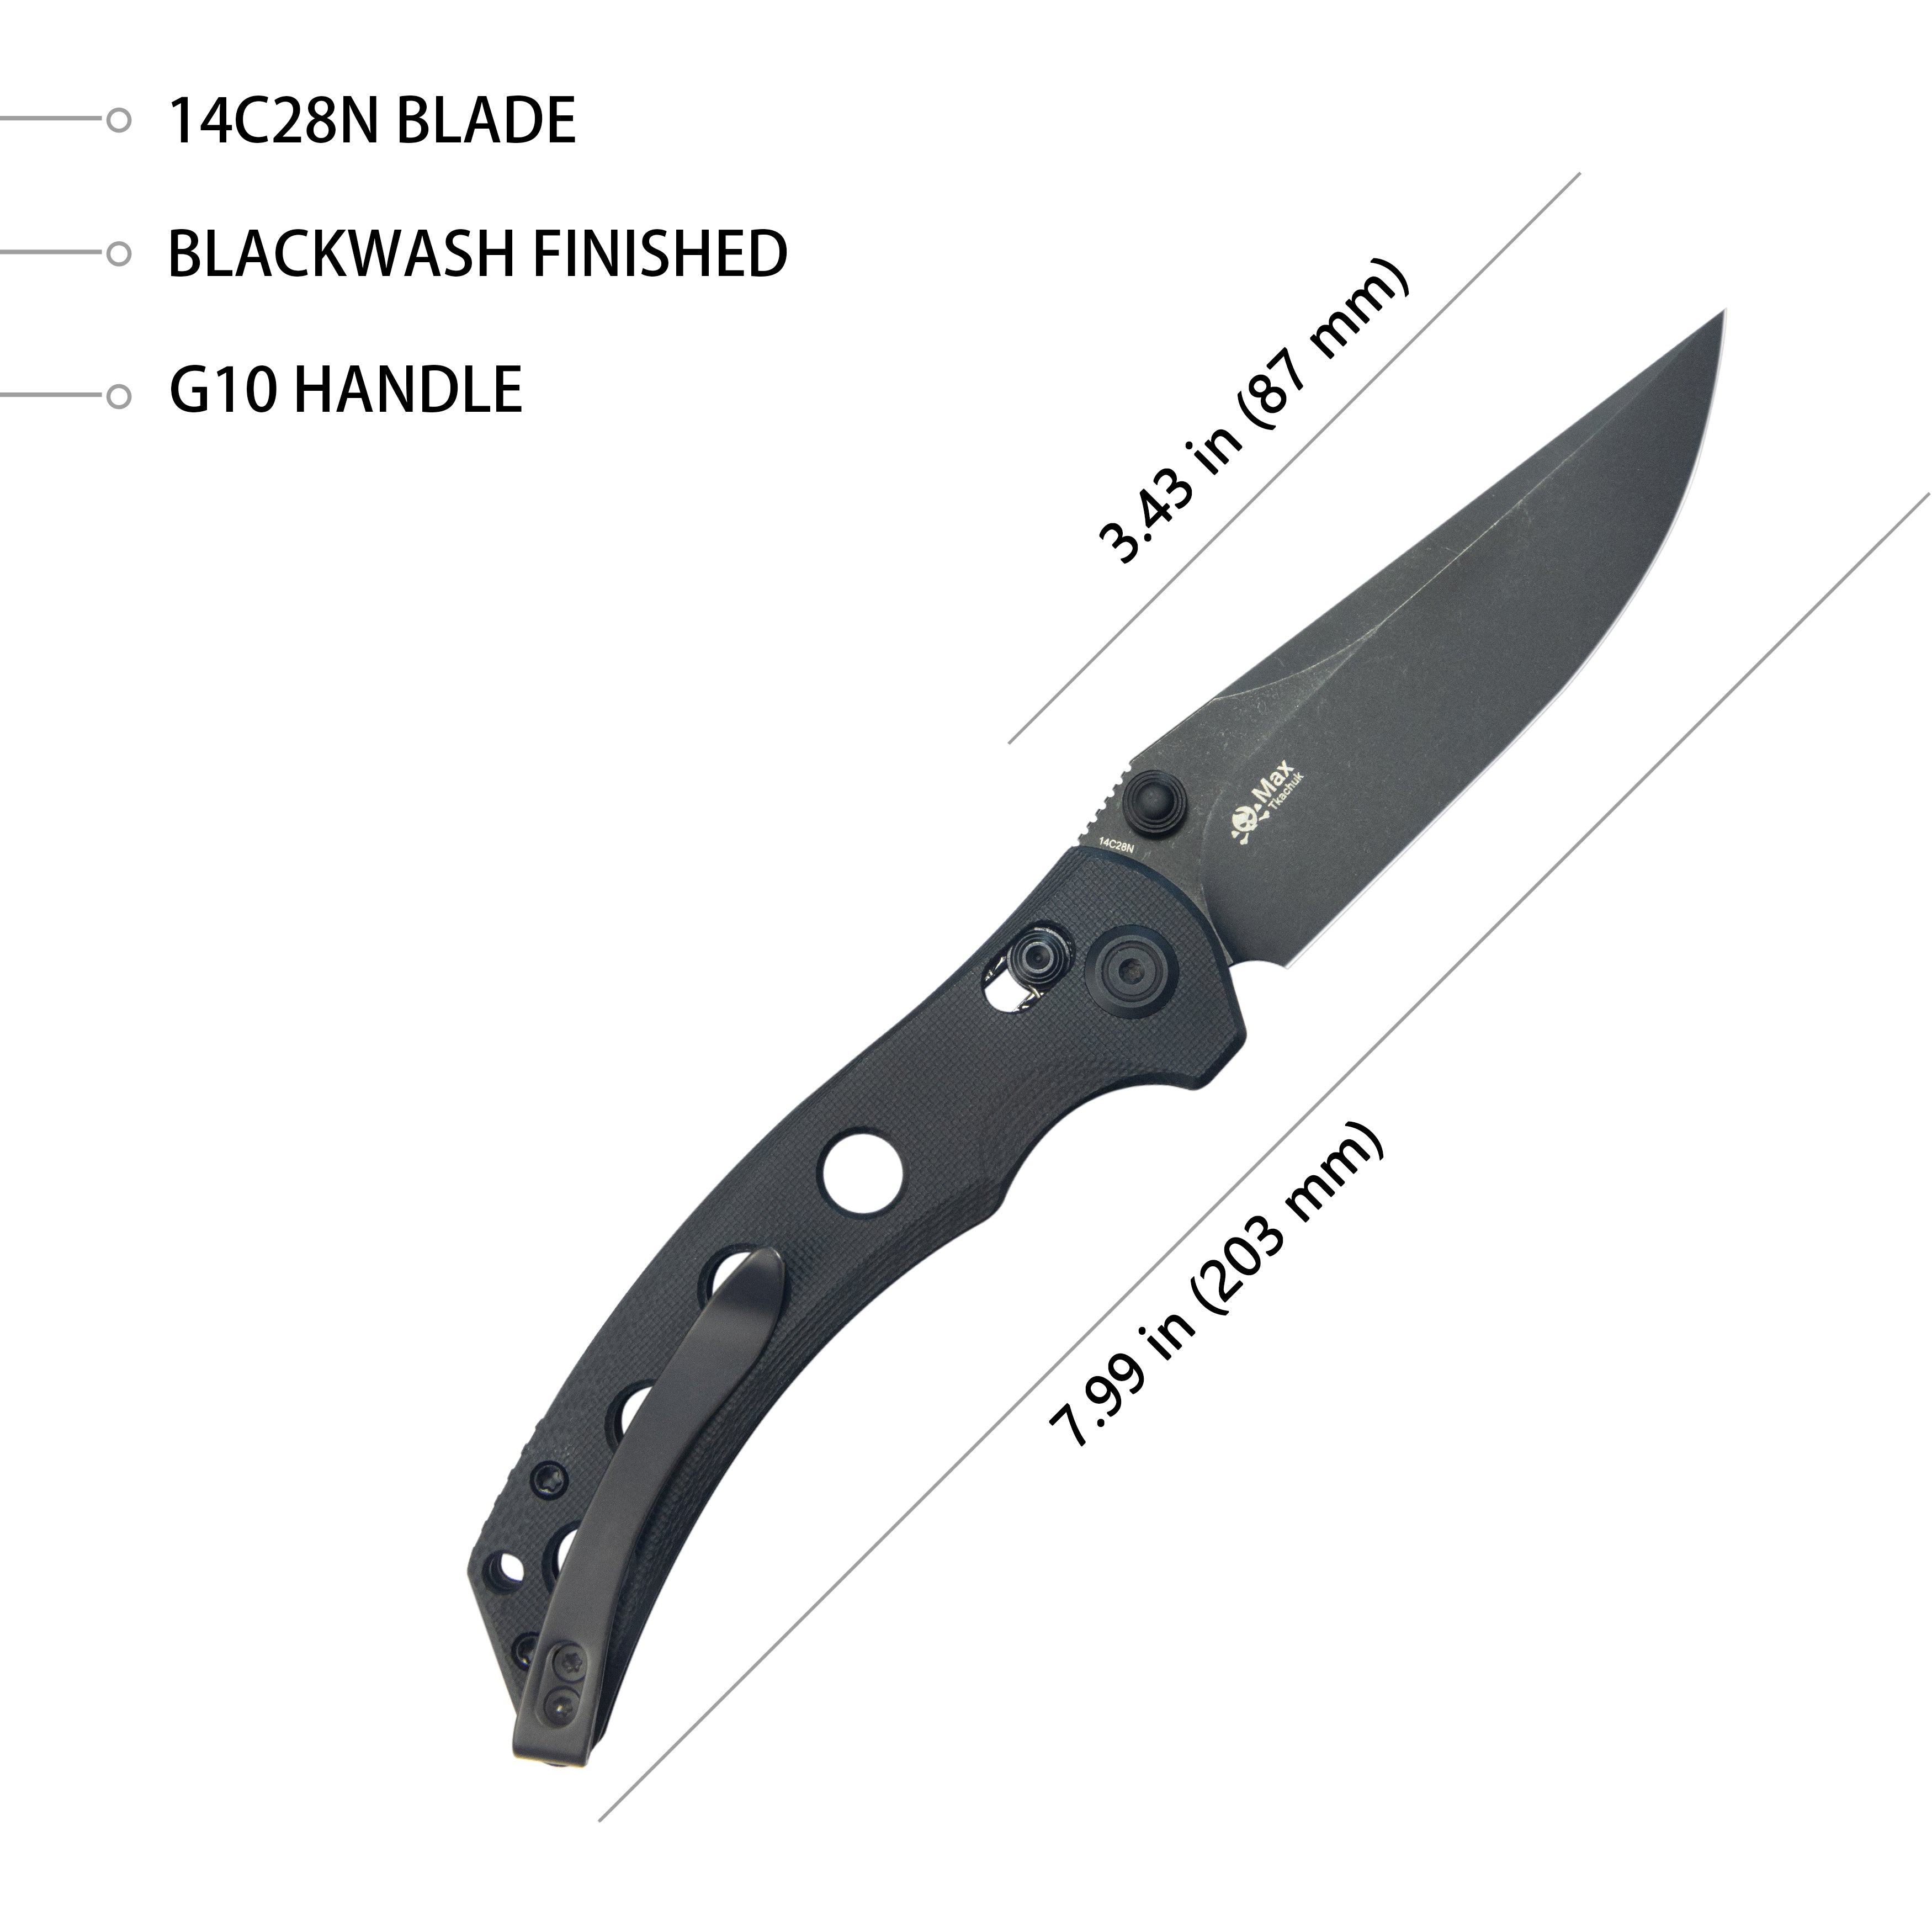 Hound Crossbar Lock Folding Pocket Knife Black G-10 Handle 3.43" Blackwash 14C28N Blade KU172B